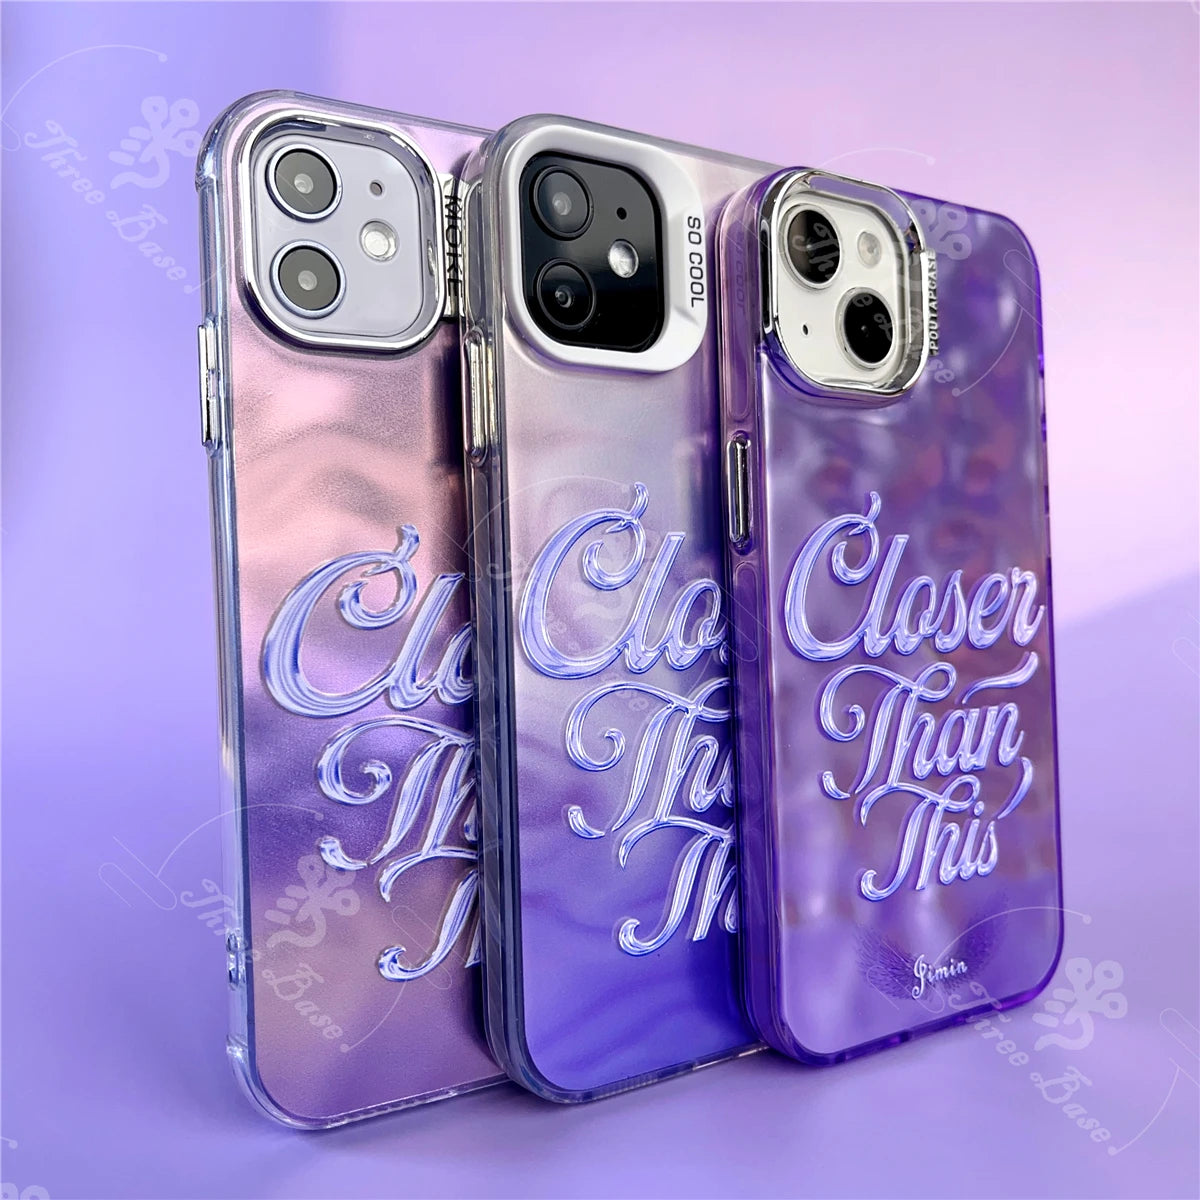 Closer Than This phone case JIMIN BTS iPhone case